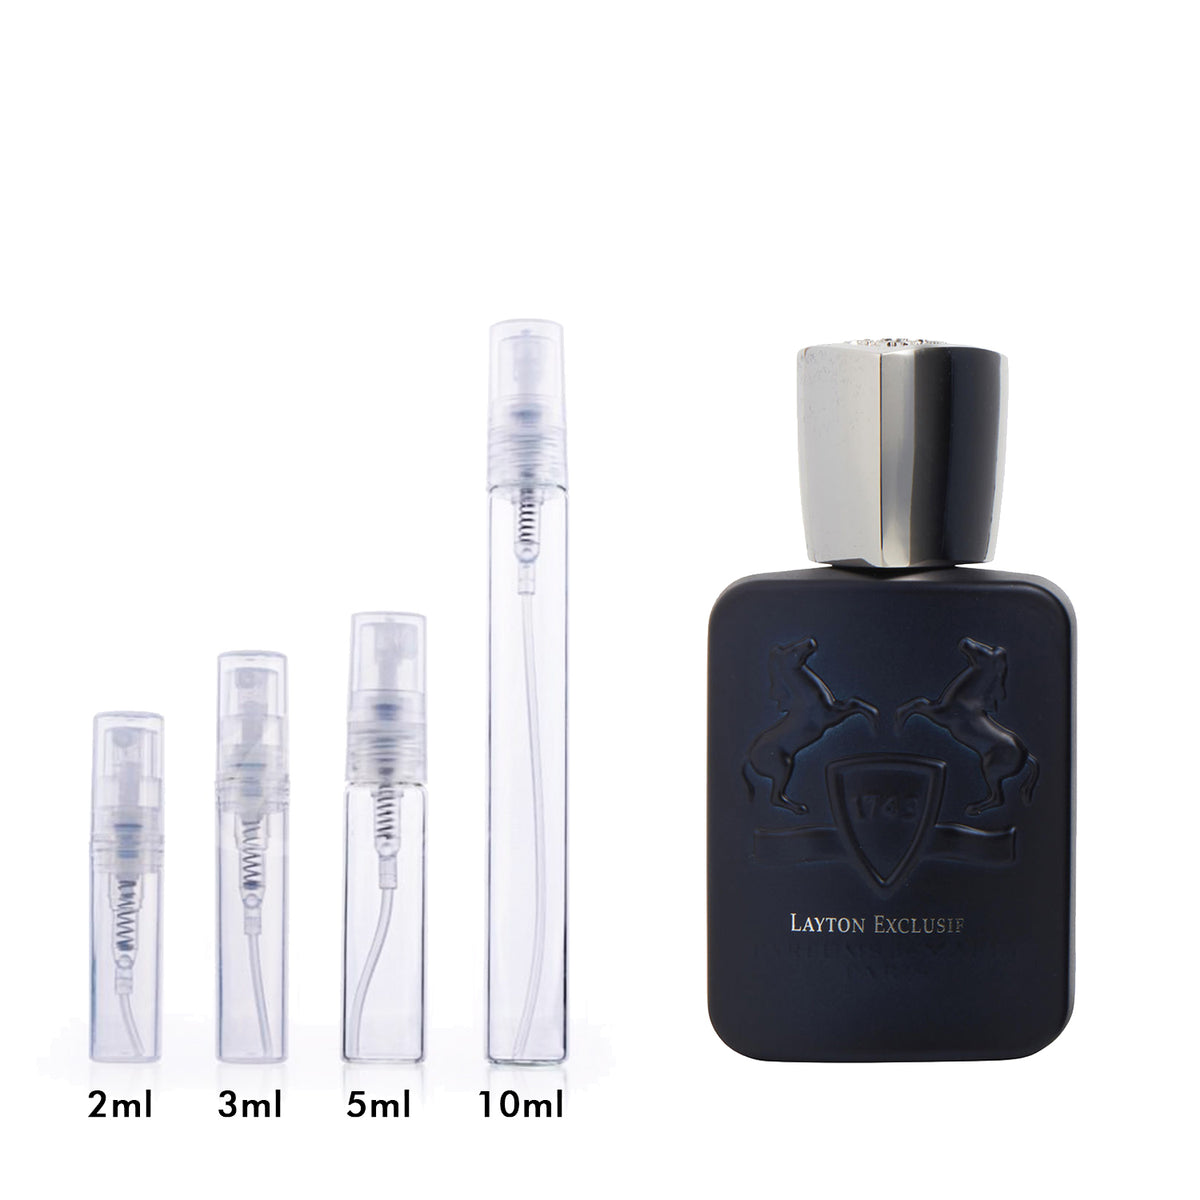 Layton Exclusif by Parfums de Marly Fragrance Samples | DecantX | Eau de Parfum Scent and Travel Size Perfume Atomizer